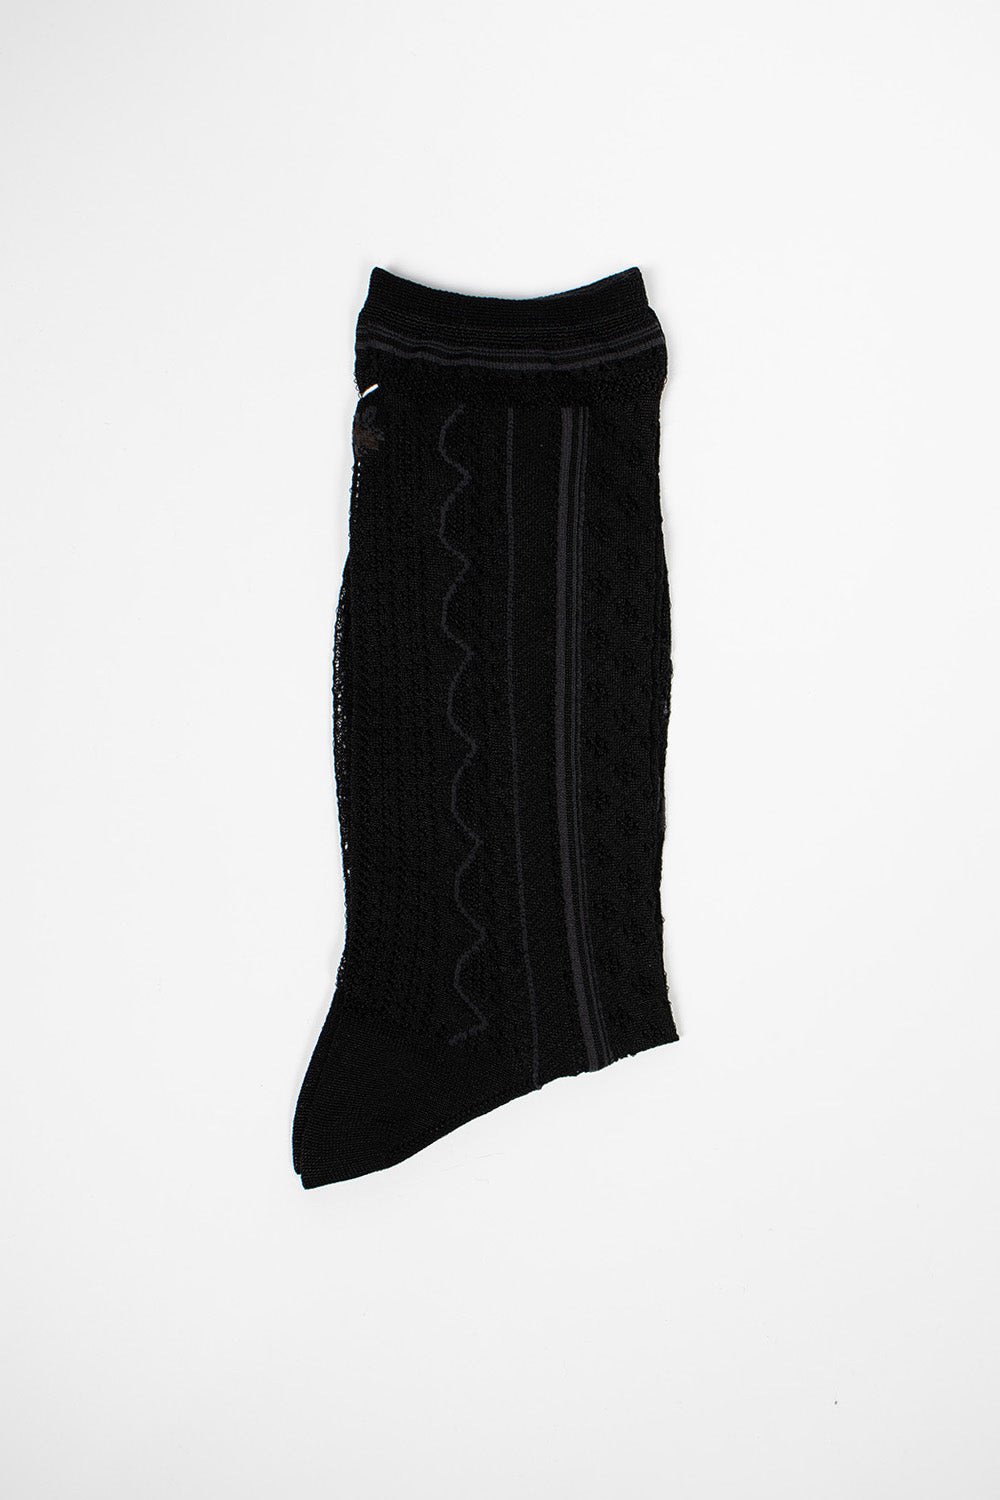 KT-161A Silk Baller Socks Black